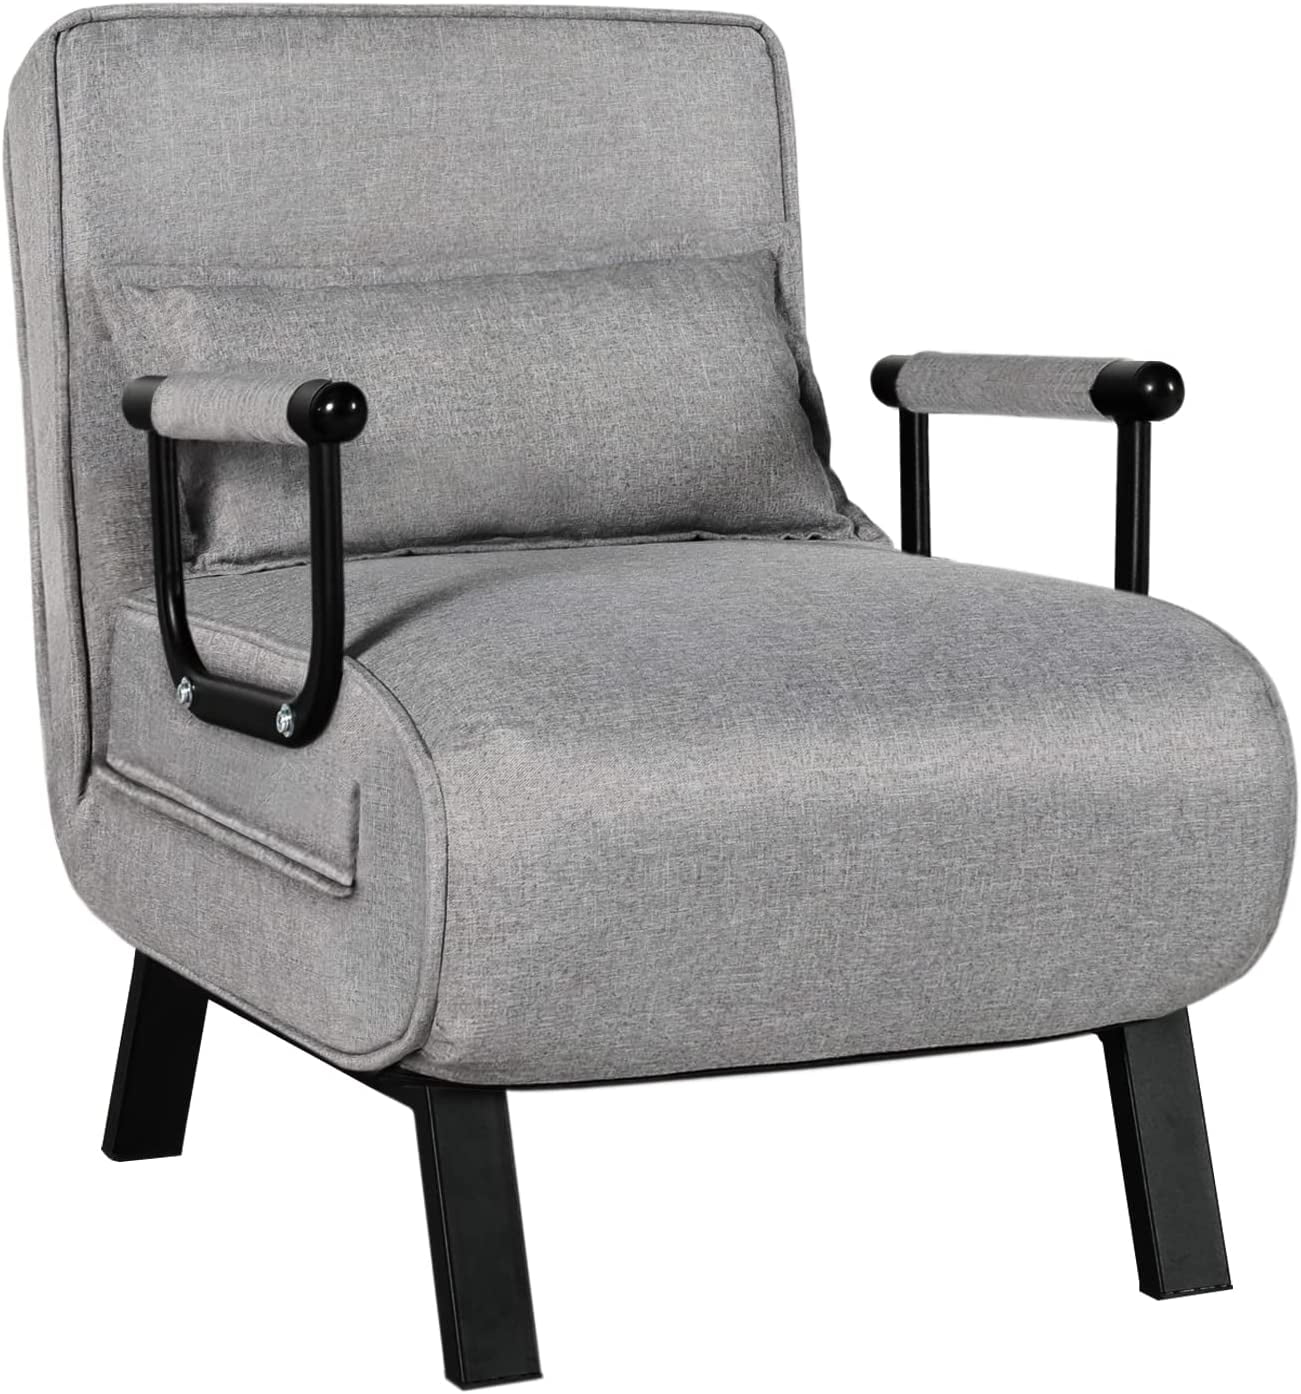 Ainfox Folding Sofa Bed, Convertible Ottoman Chair Chaise Sofa Bed 